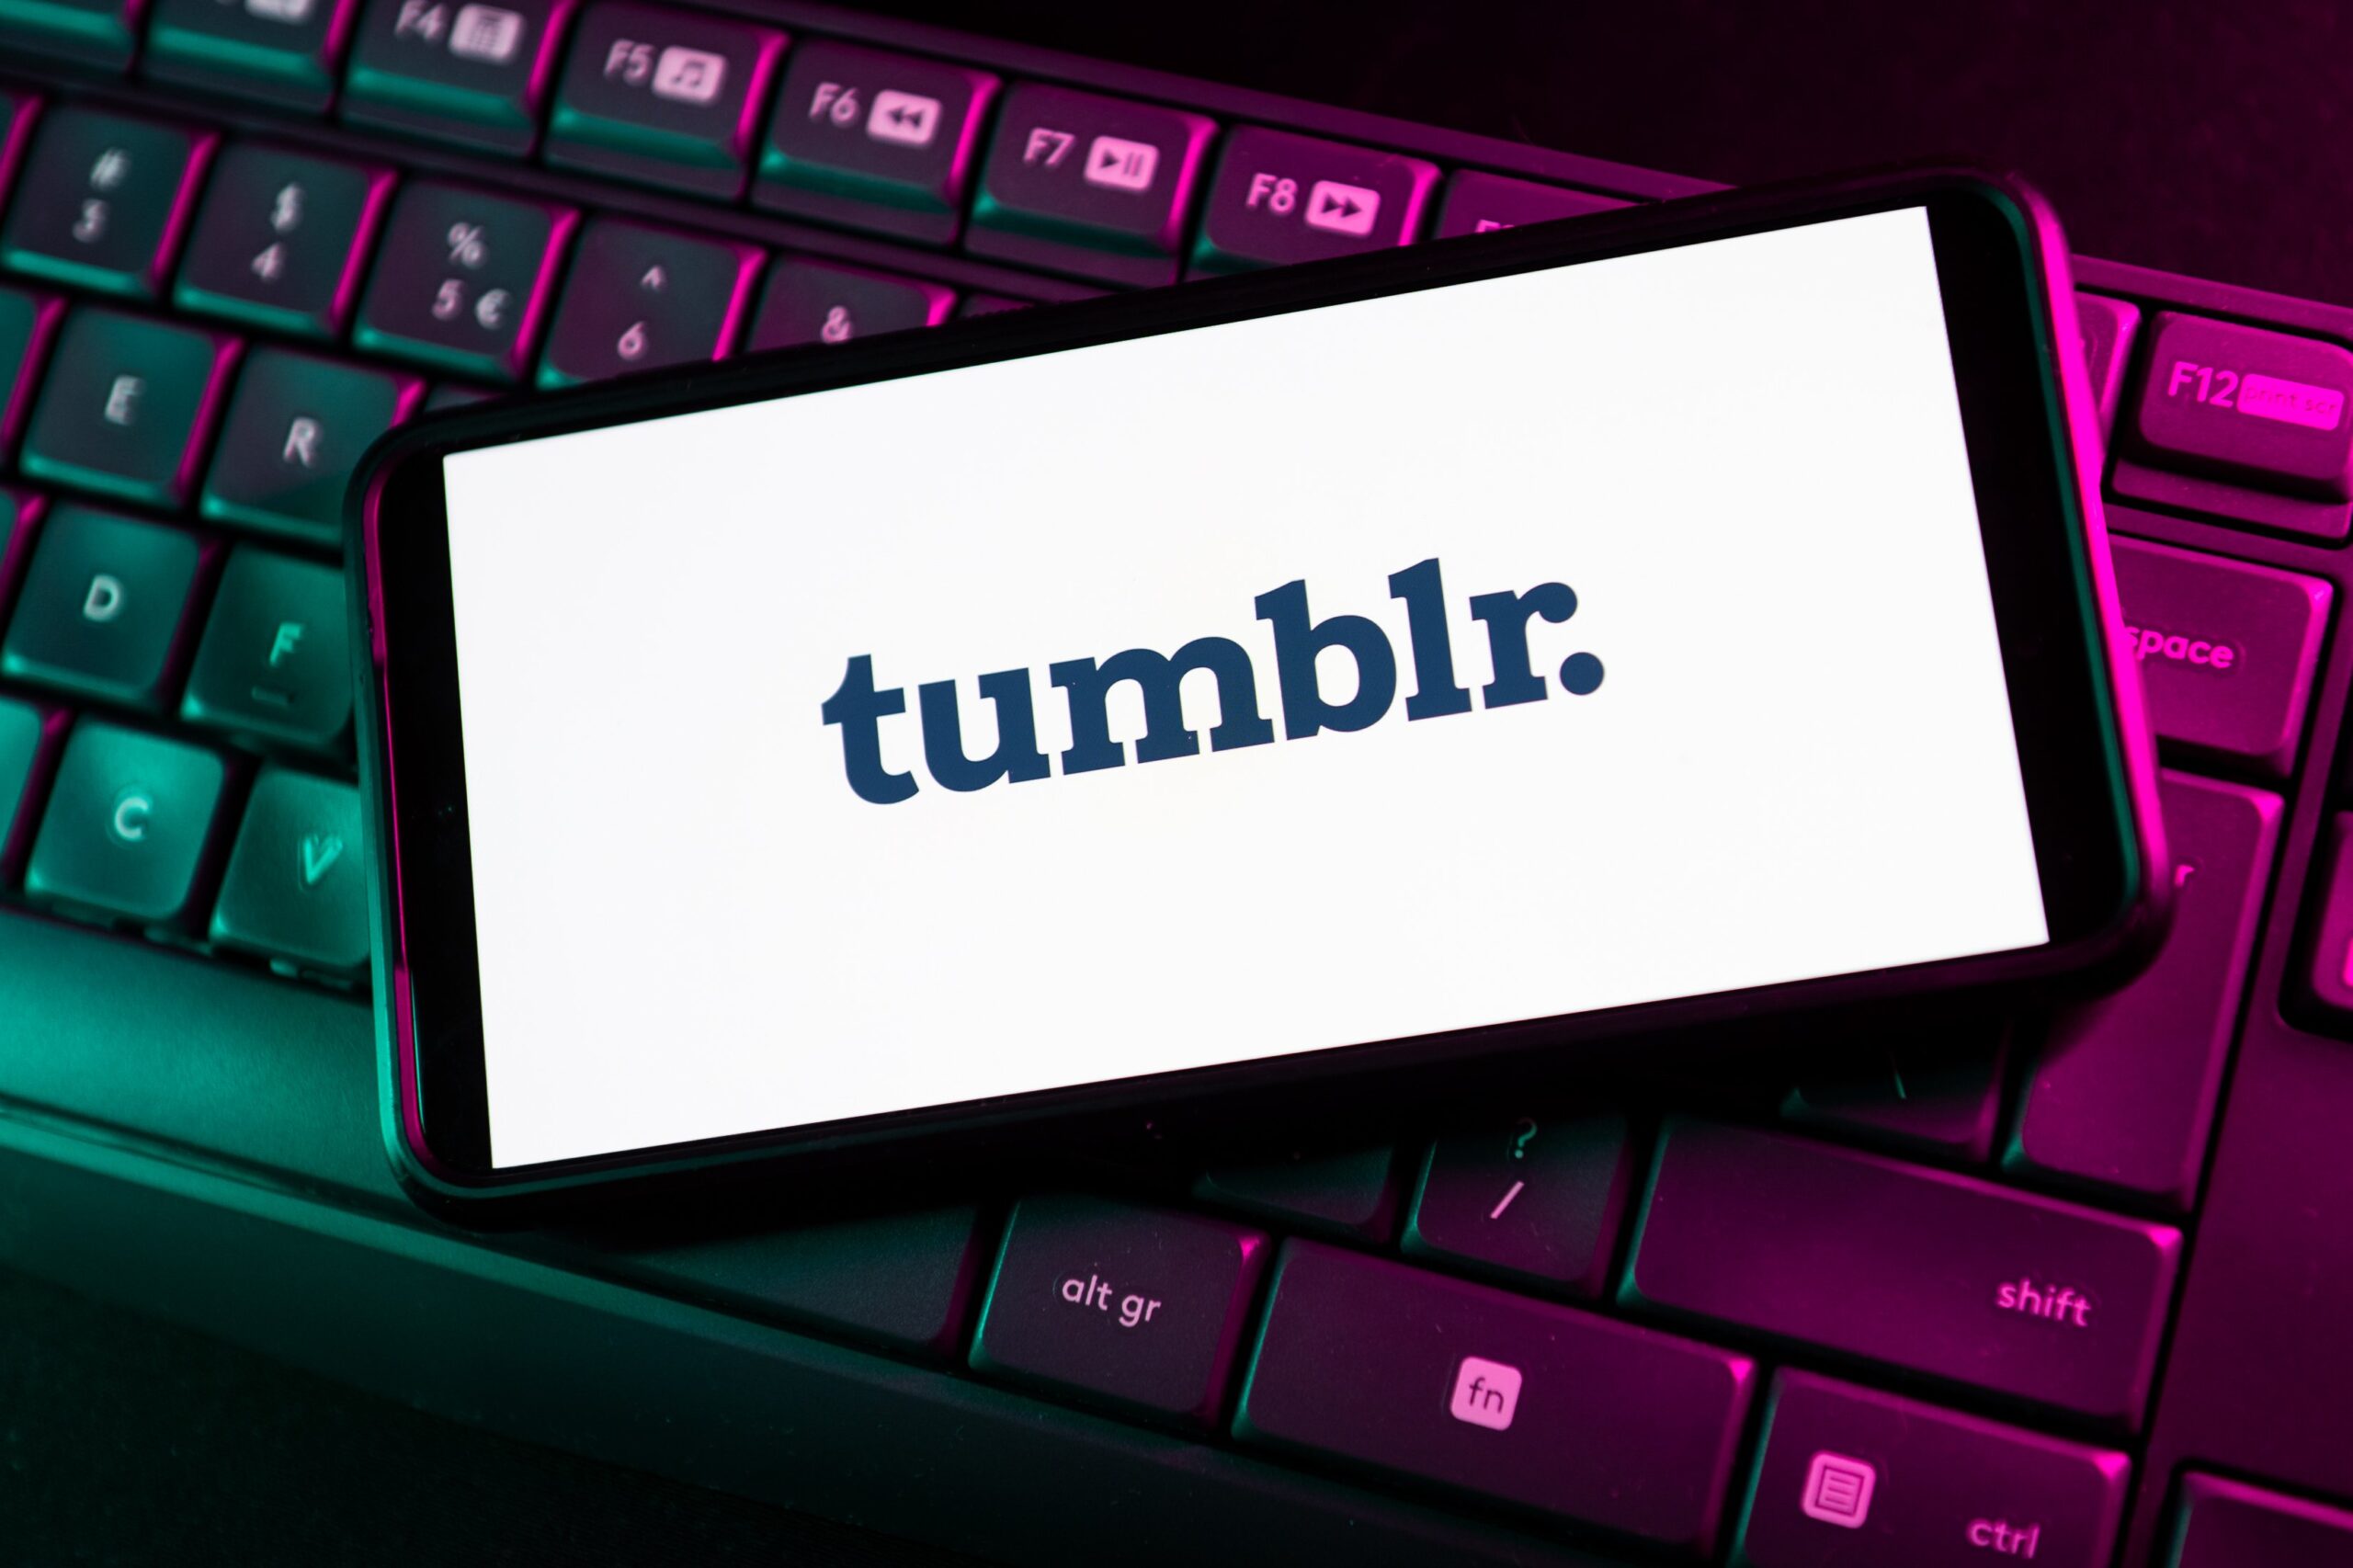 Tumblr logo seen displayed on a smartphone.